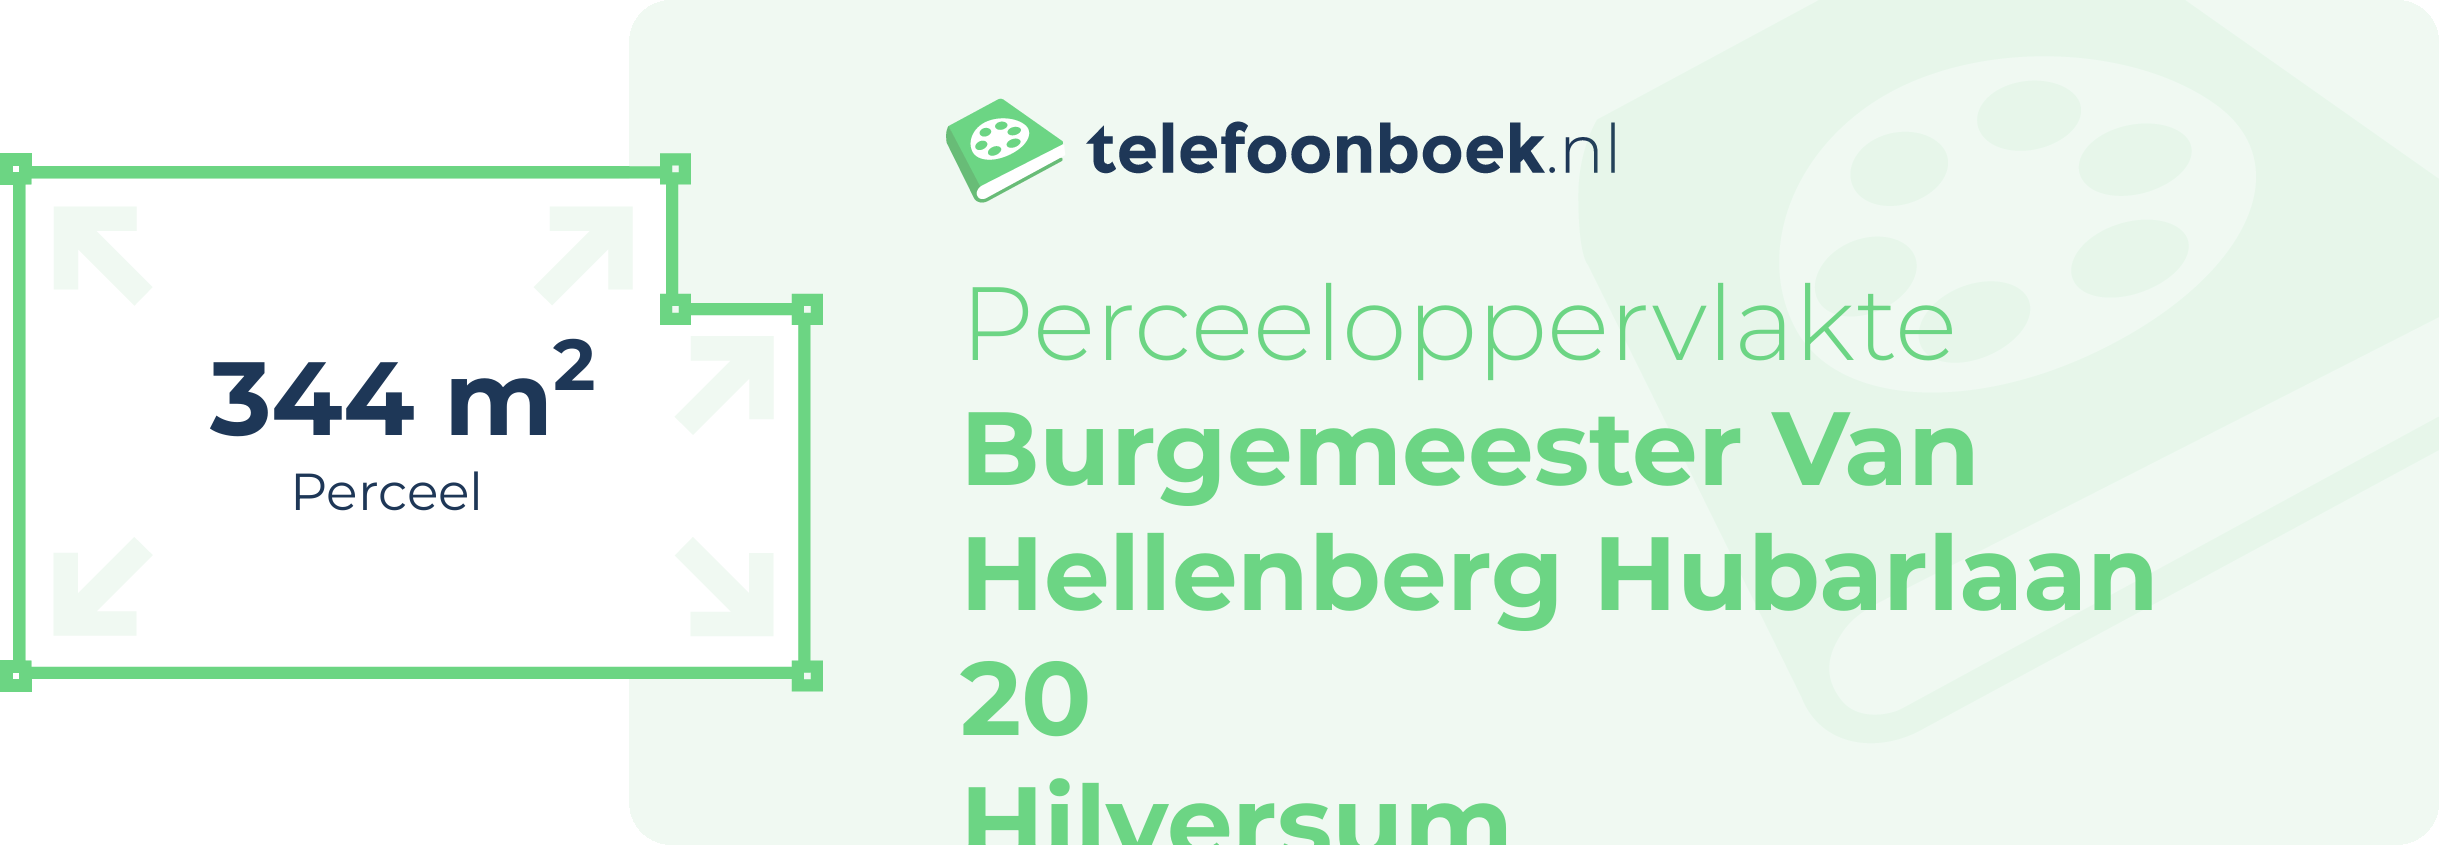 Perceeloppervlakte Burgemeester Van Hellenberg Hubarlaan 20 Hilversum